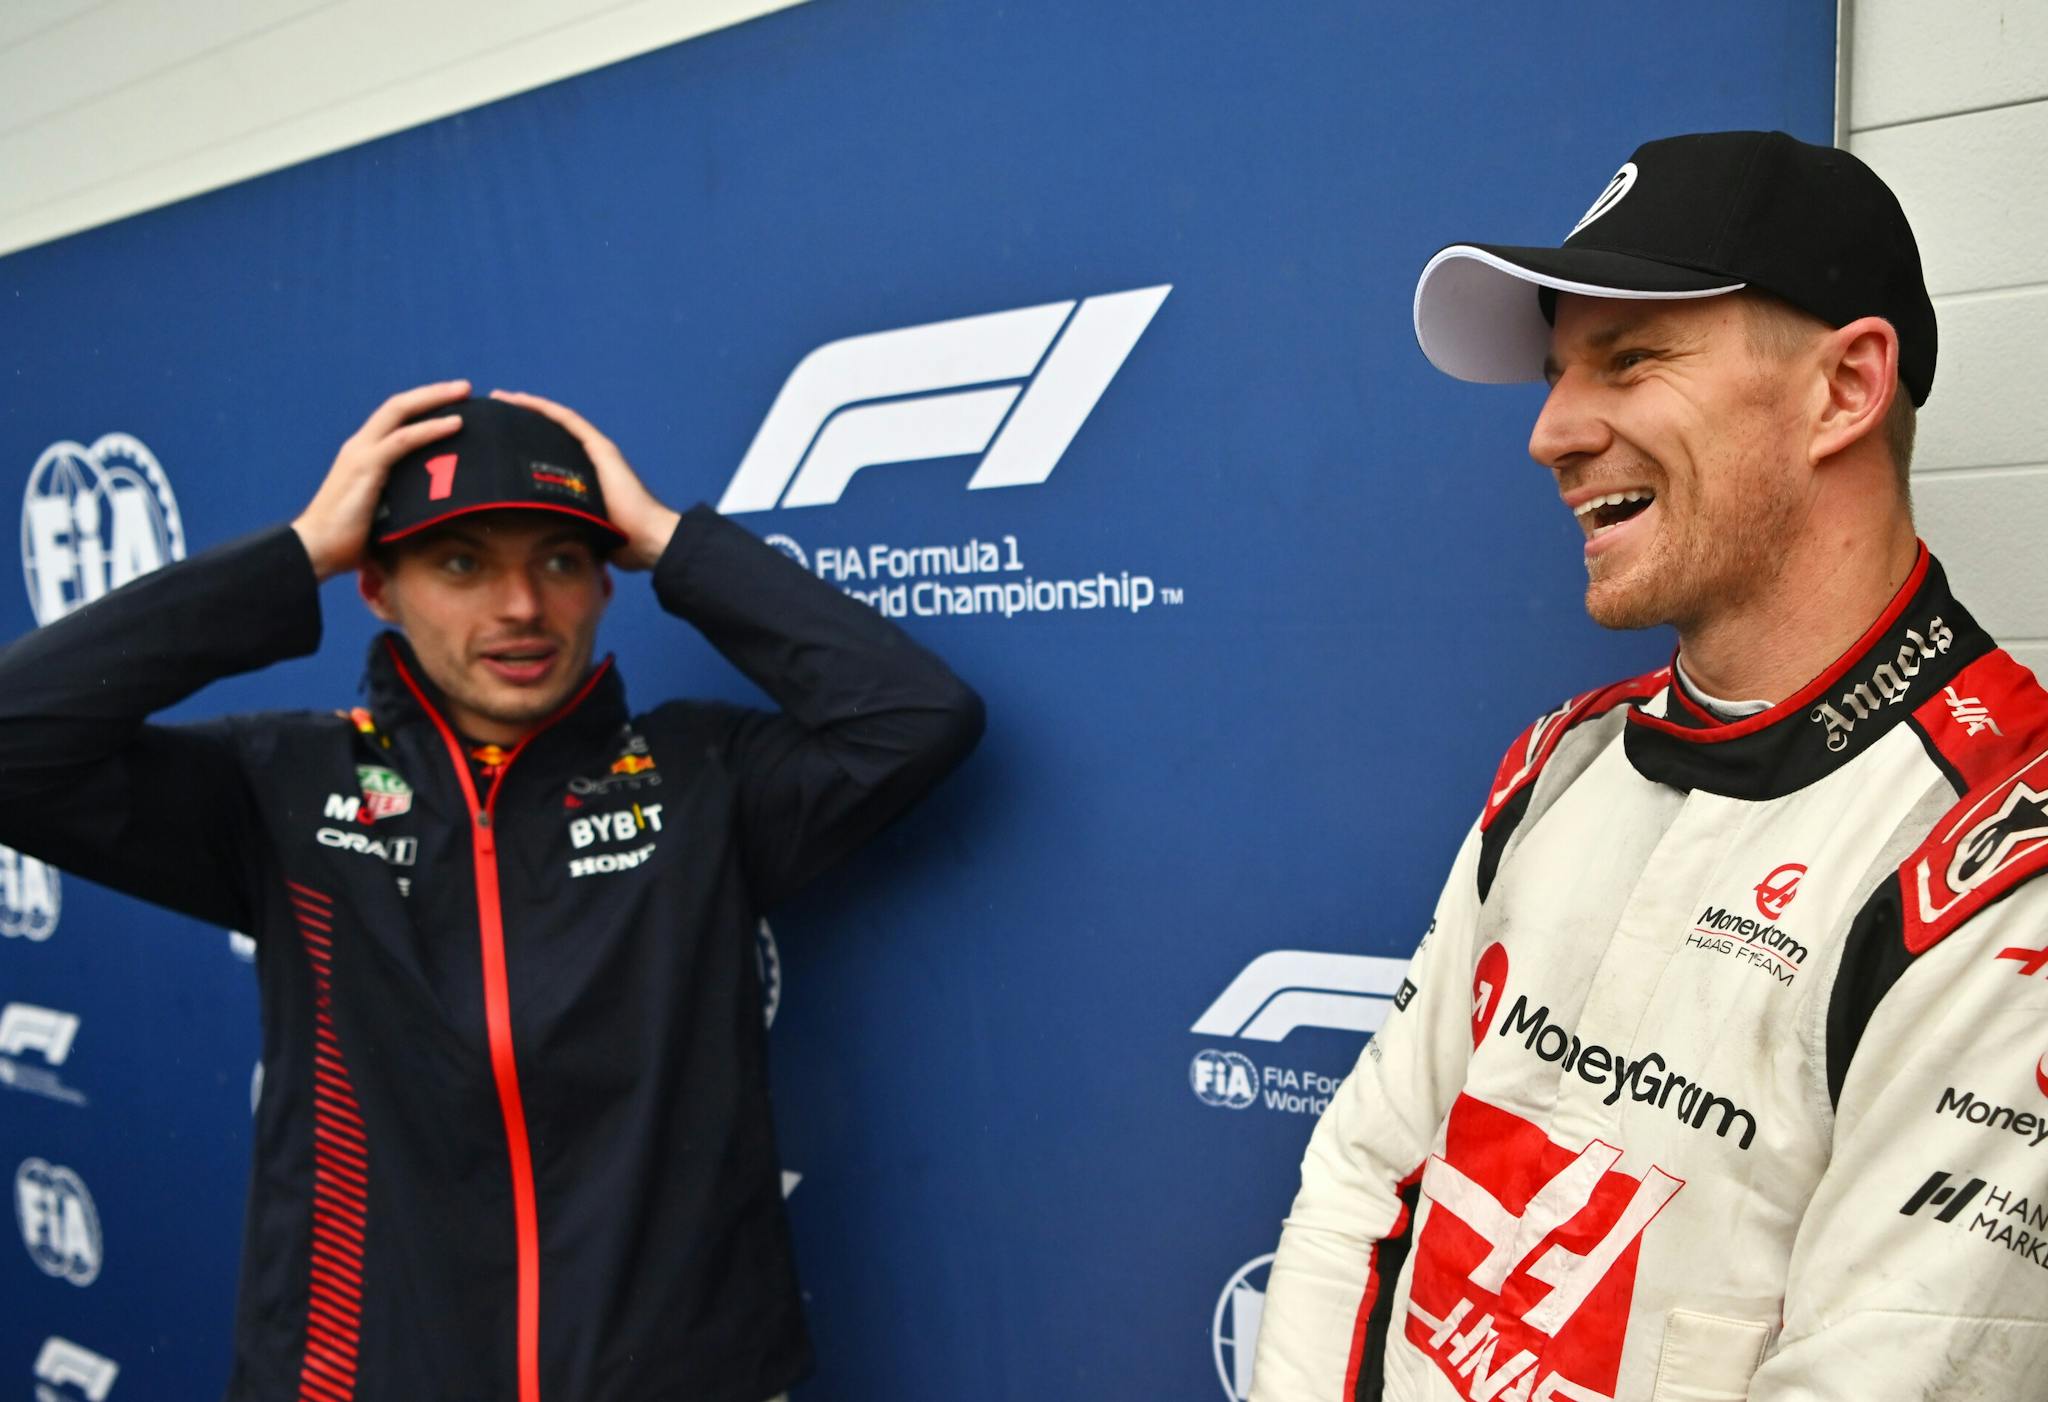 Hulkenberg pomógł Verstappenowi zdobyć pole position: Oddałem przysługę